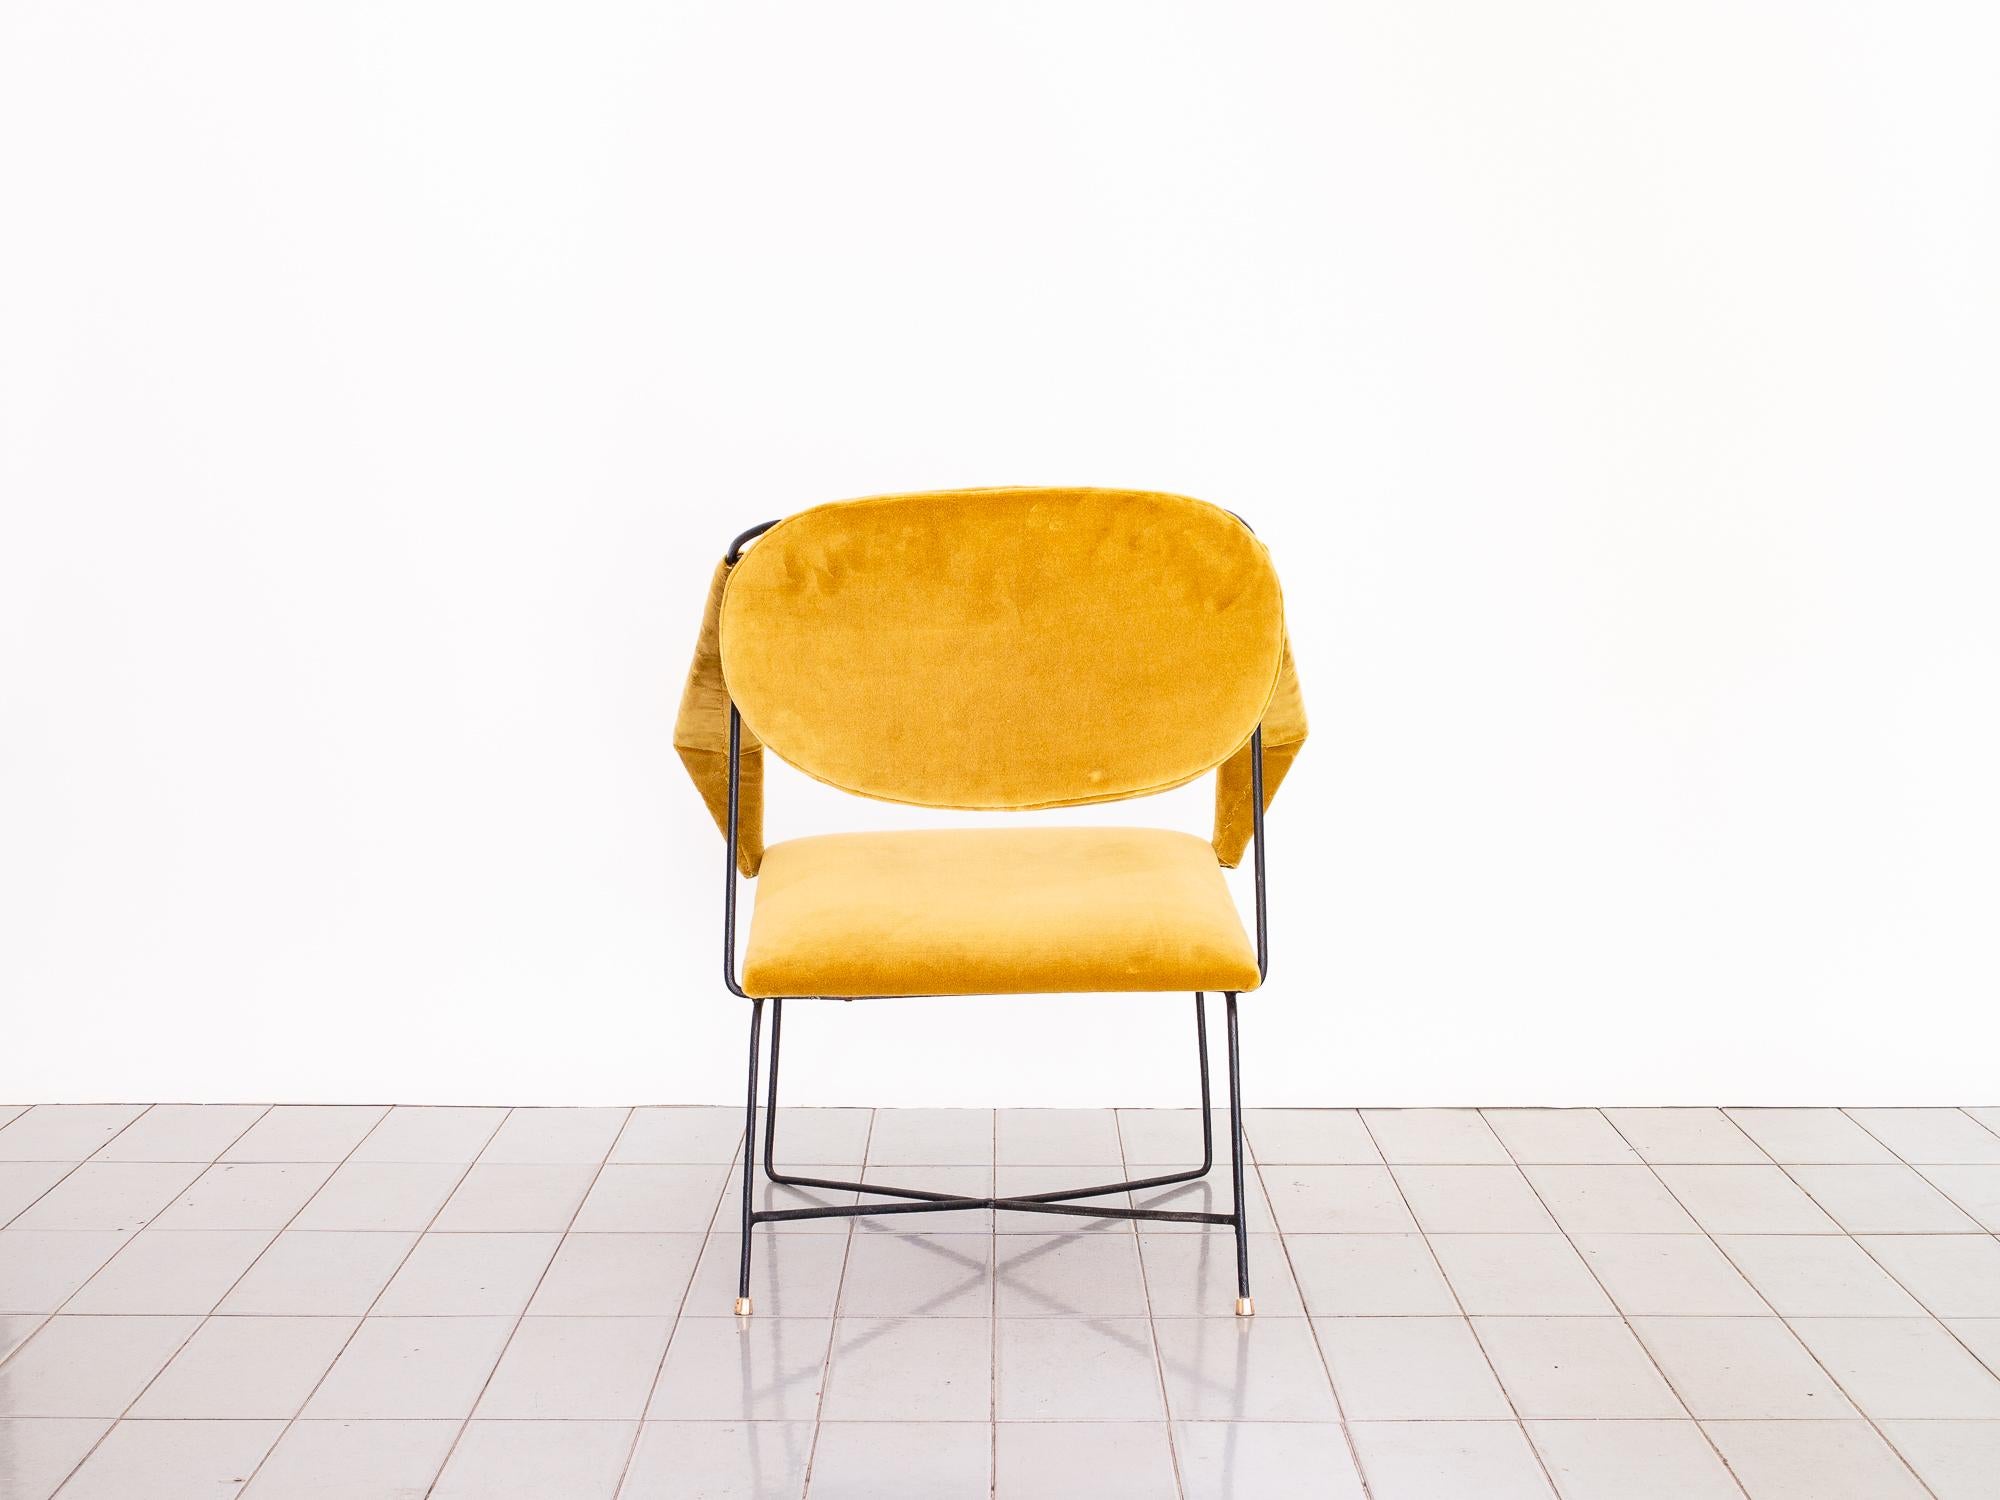 1950s Club Chair in Wrought Iron and Yellow Velvet, Brazilian Mid Century Modern (20. Jahrhundert)